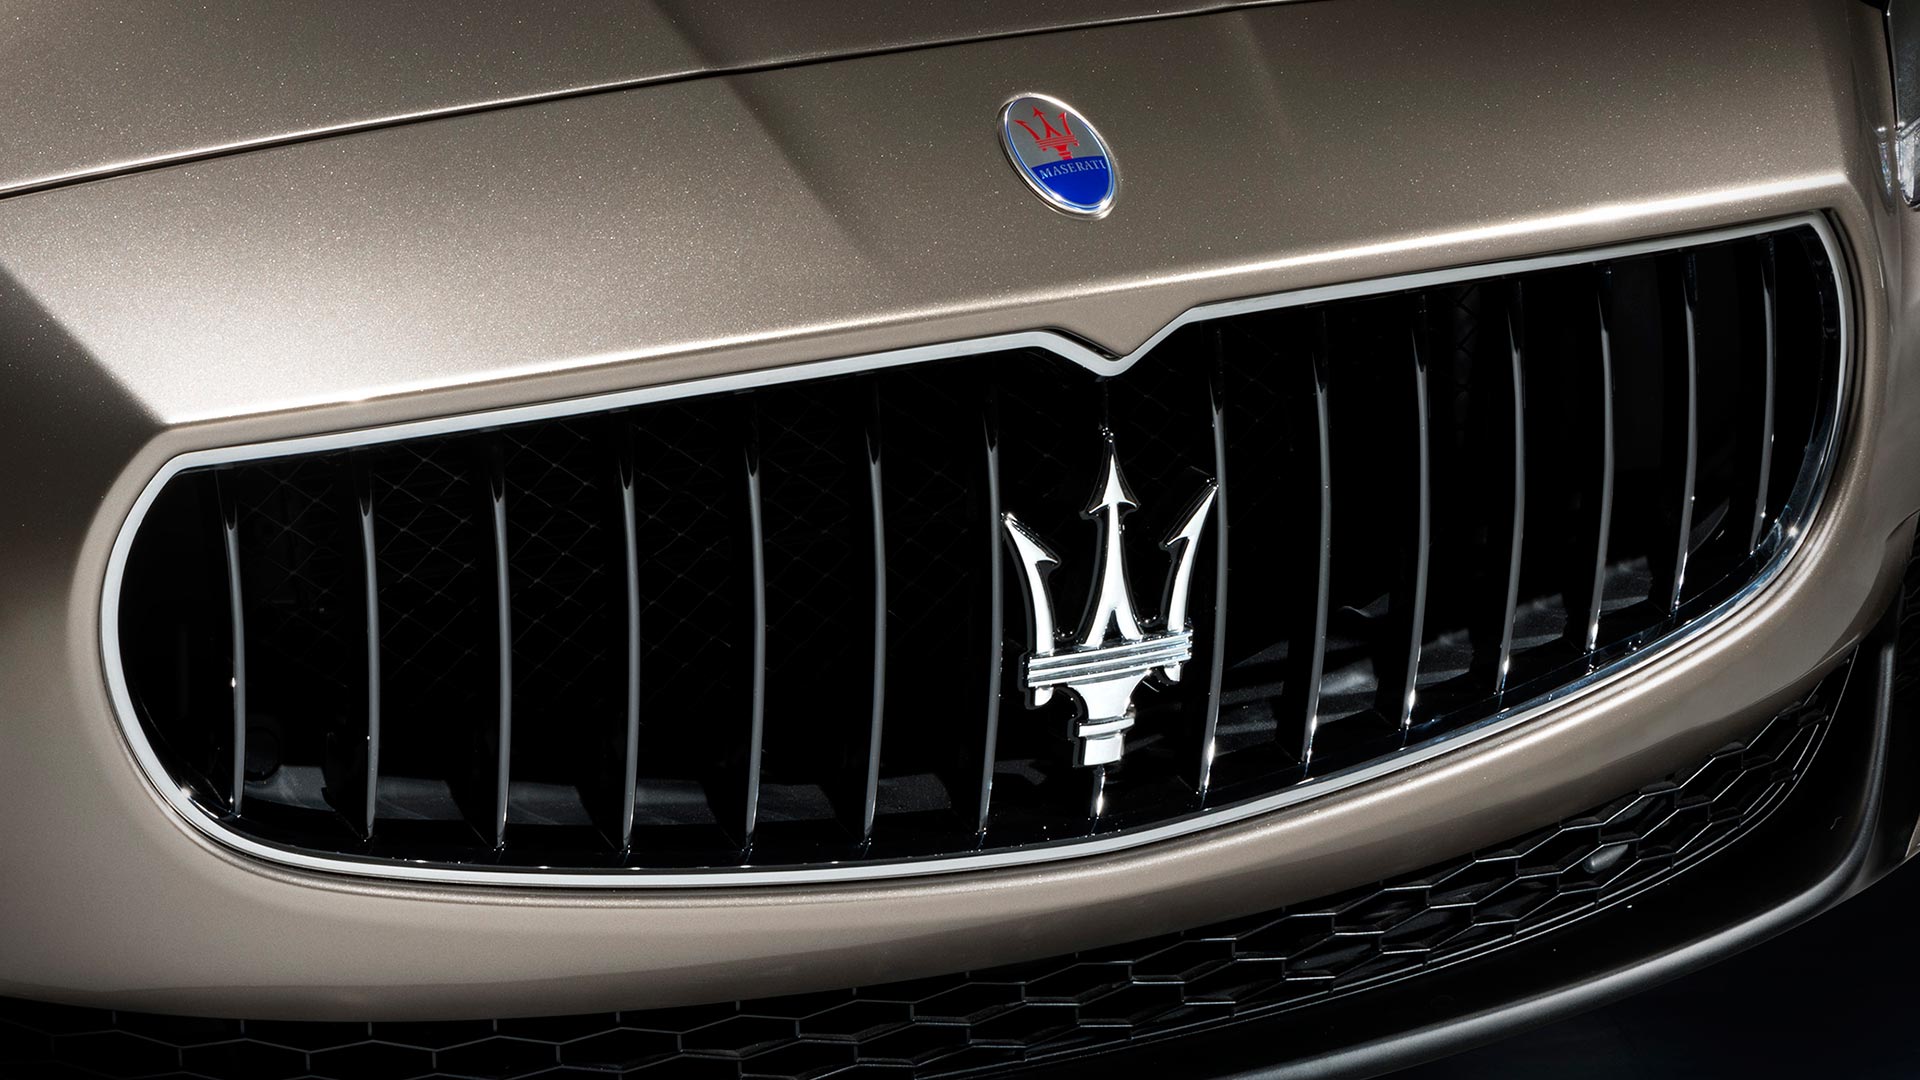 Maserati plans new electric models